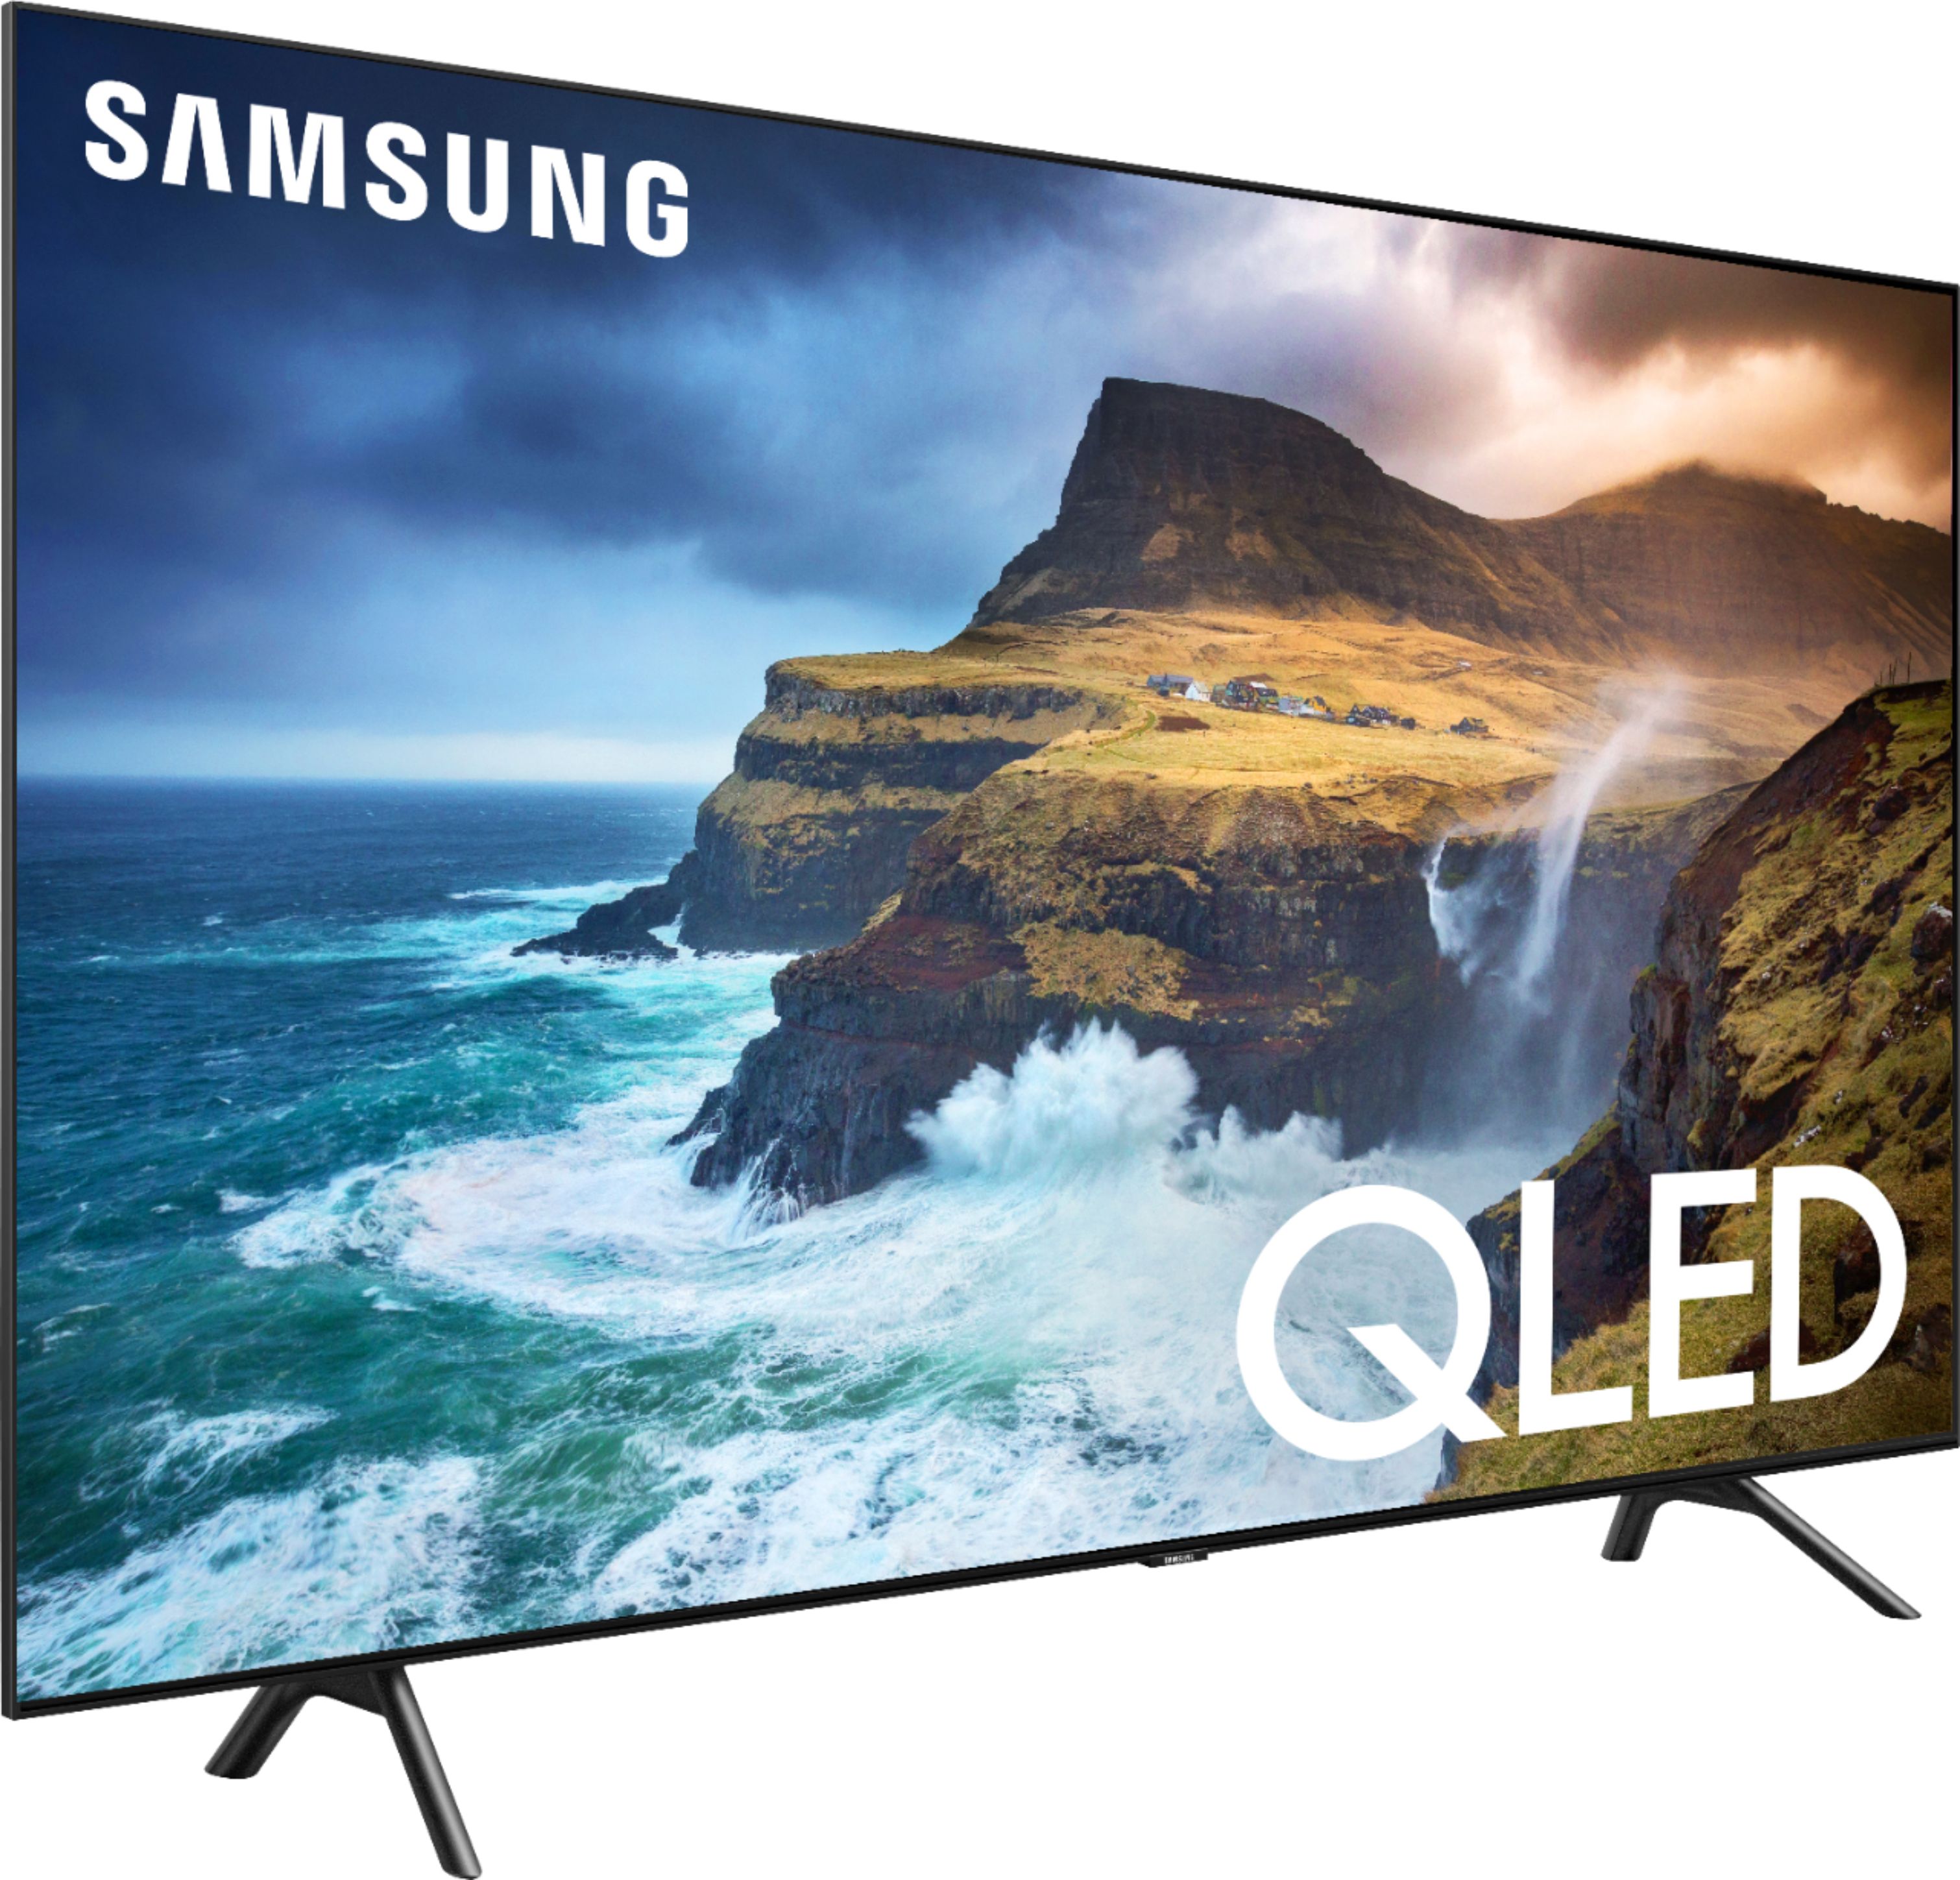 Samsung 85-inch UN85S9AFXZA Ultra HD 3D 4K LED HDTV - 